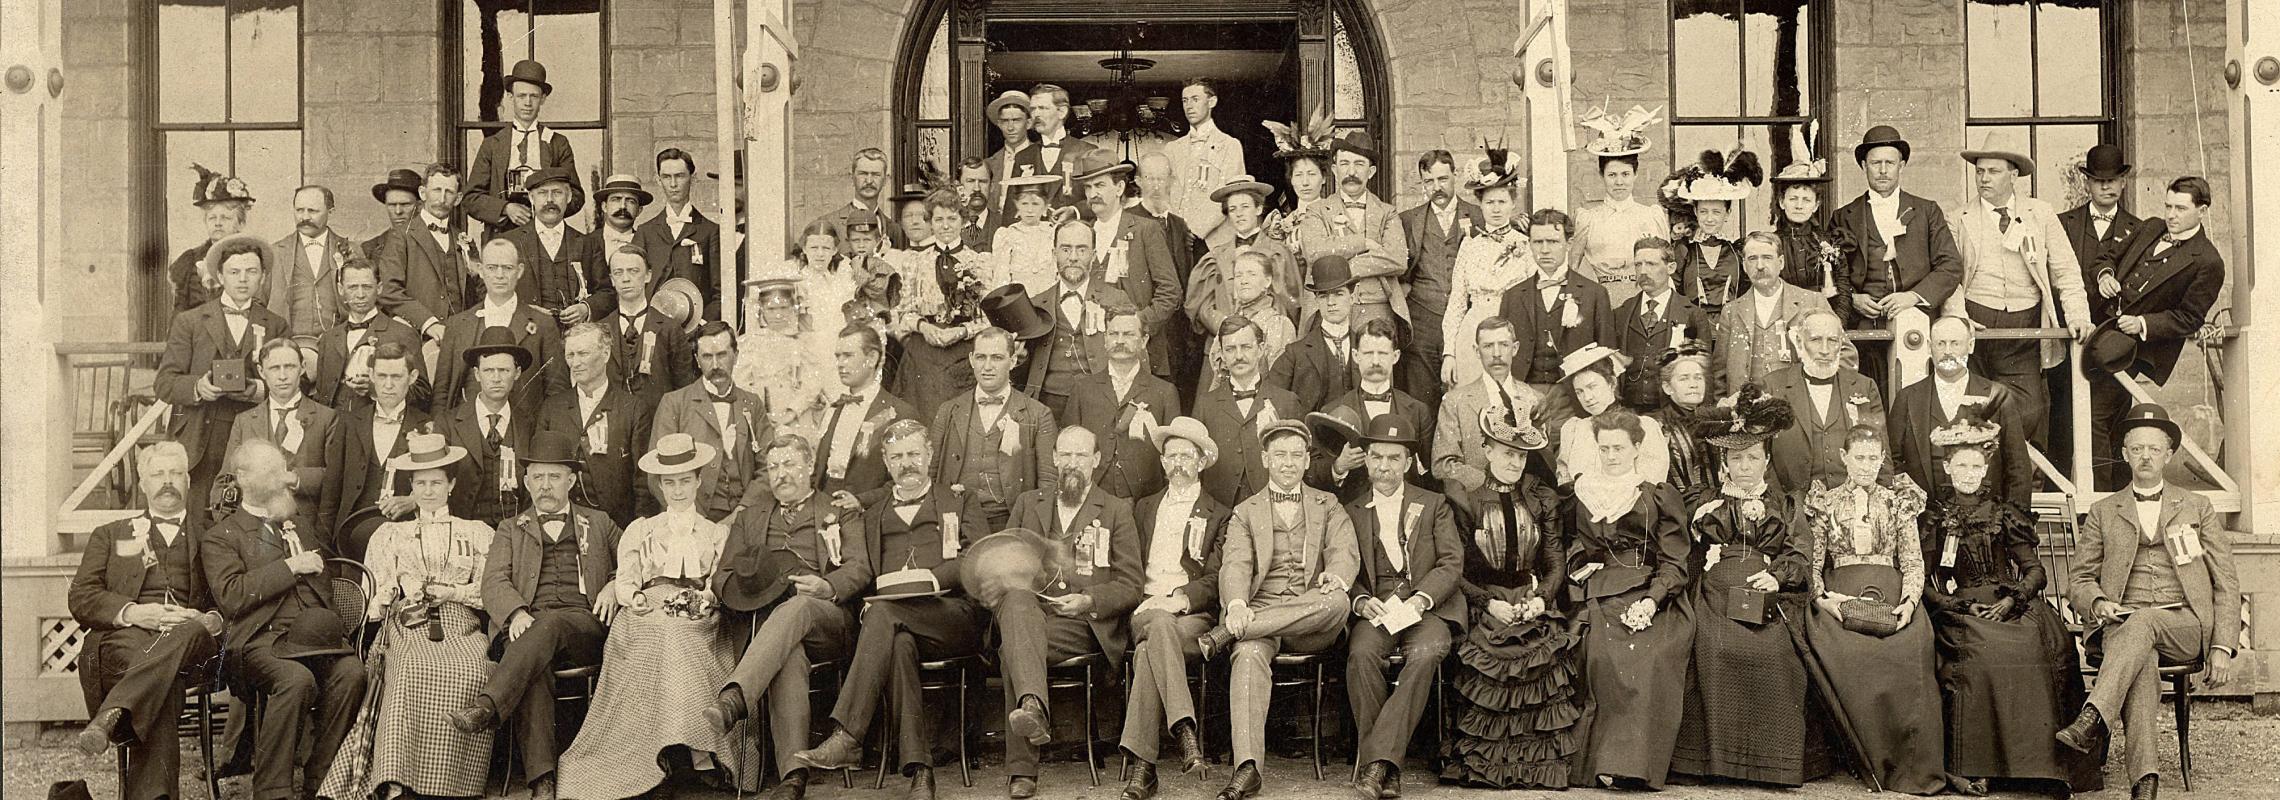 Missouri Press Association Convention 1898